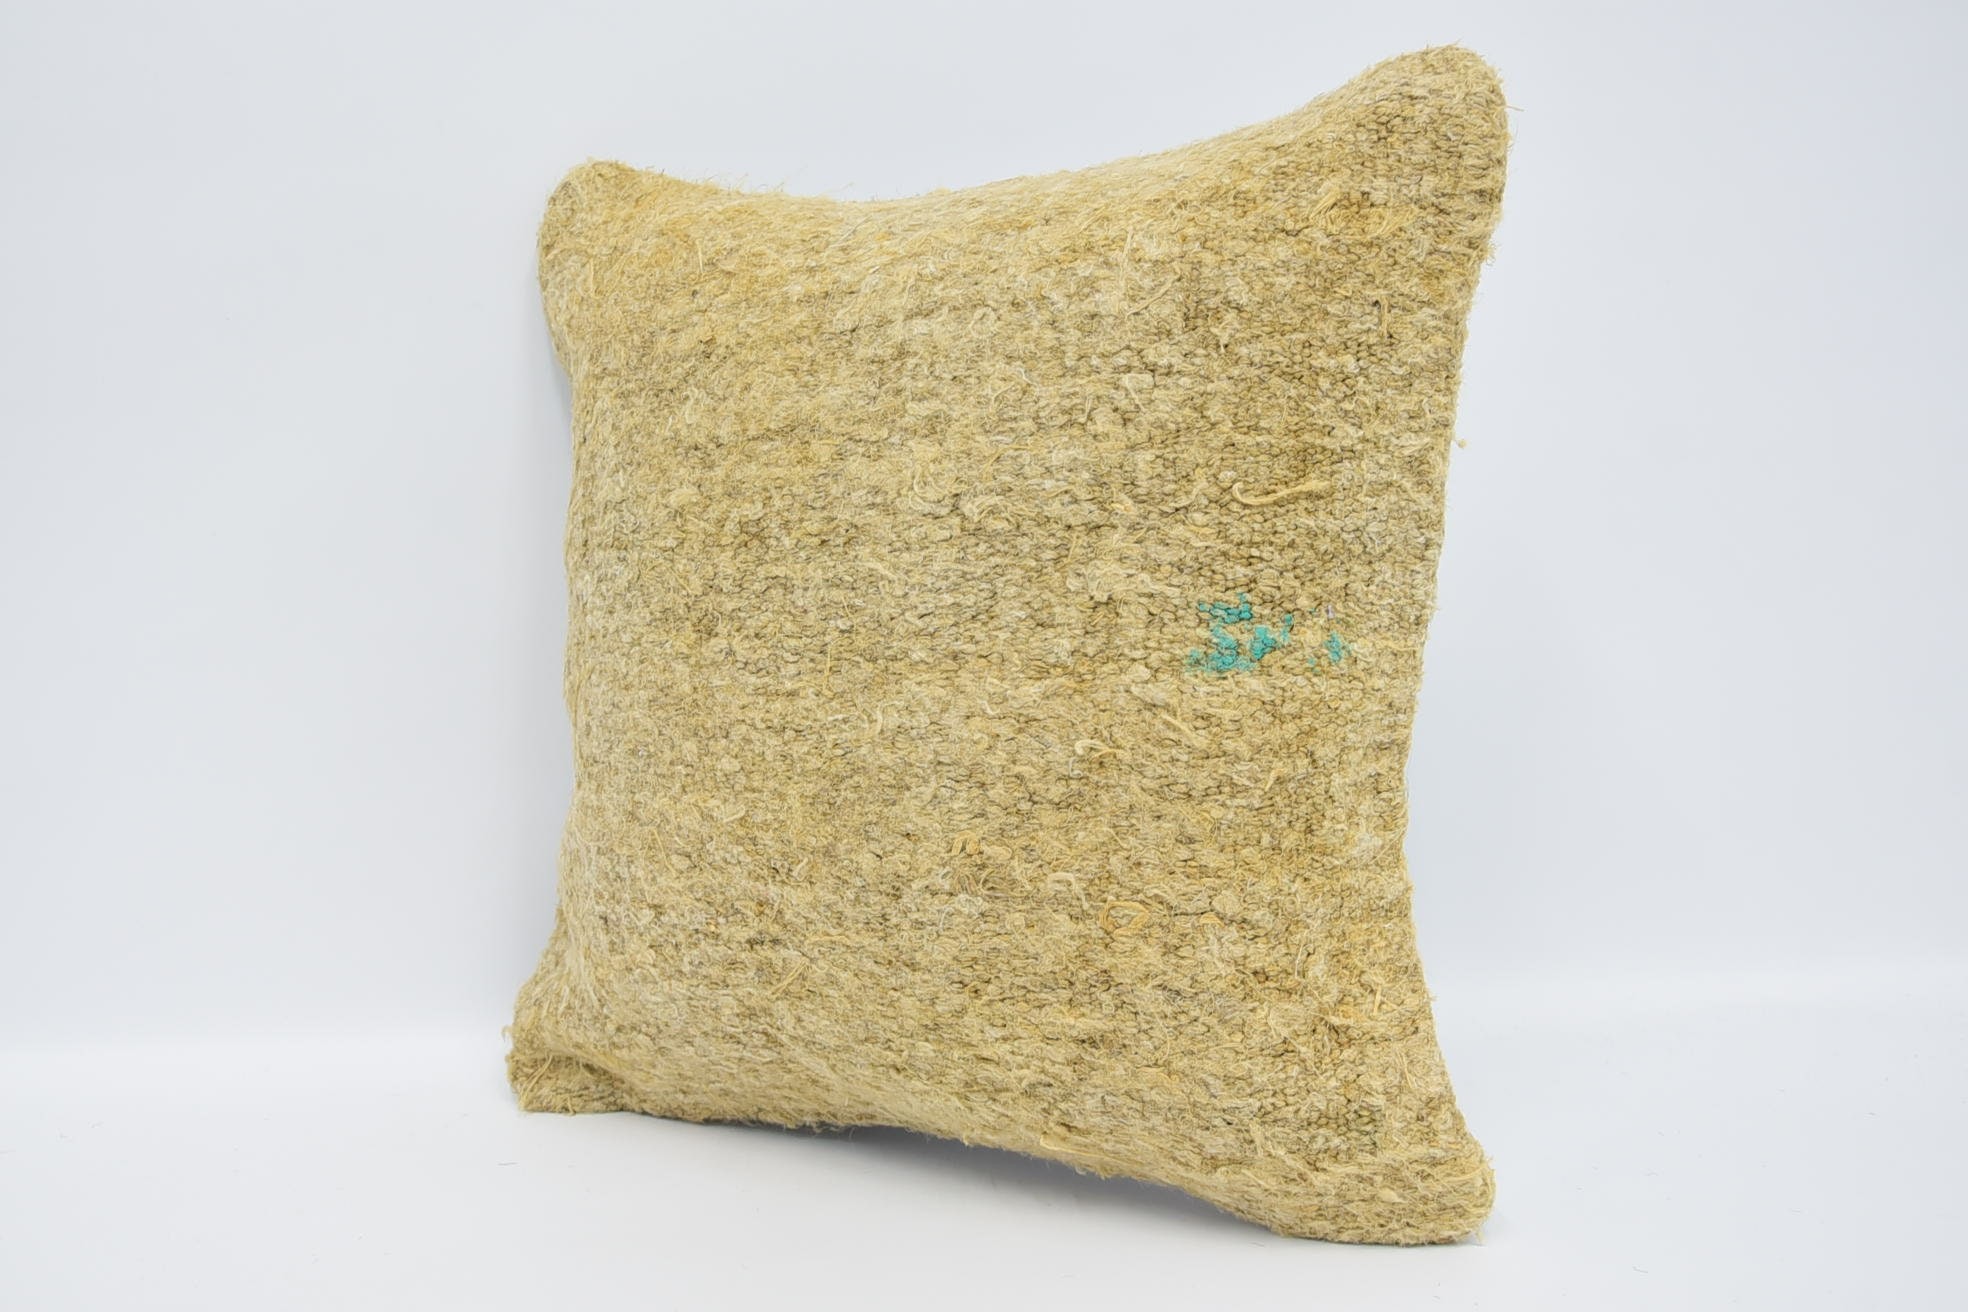 18"x18" Beige Cushion Case, Turkish Kilim Pillow, Nautical Throw Pillow Cover, Pillow for Couch, Vintage Kilim Pillow